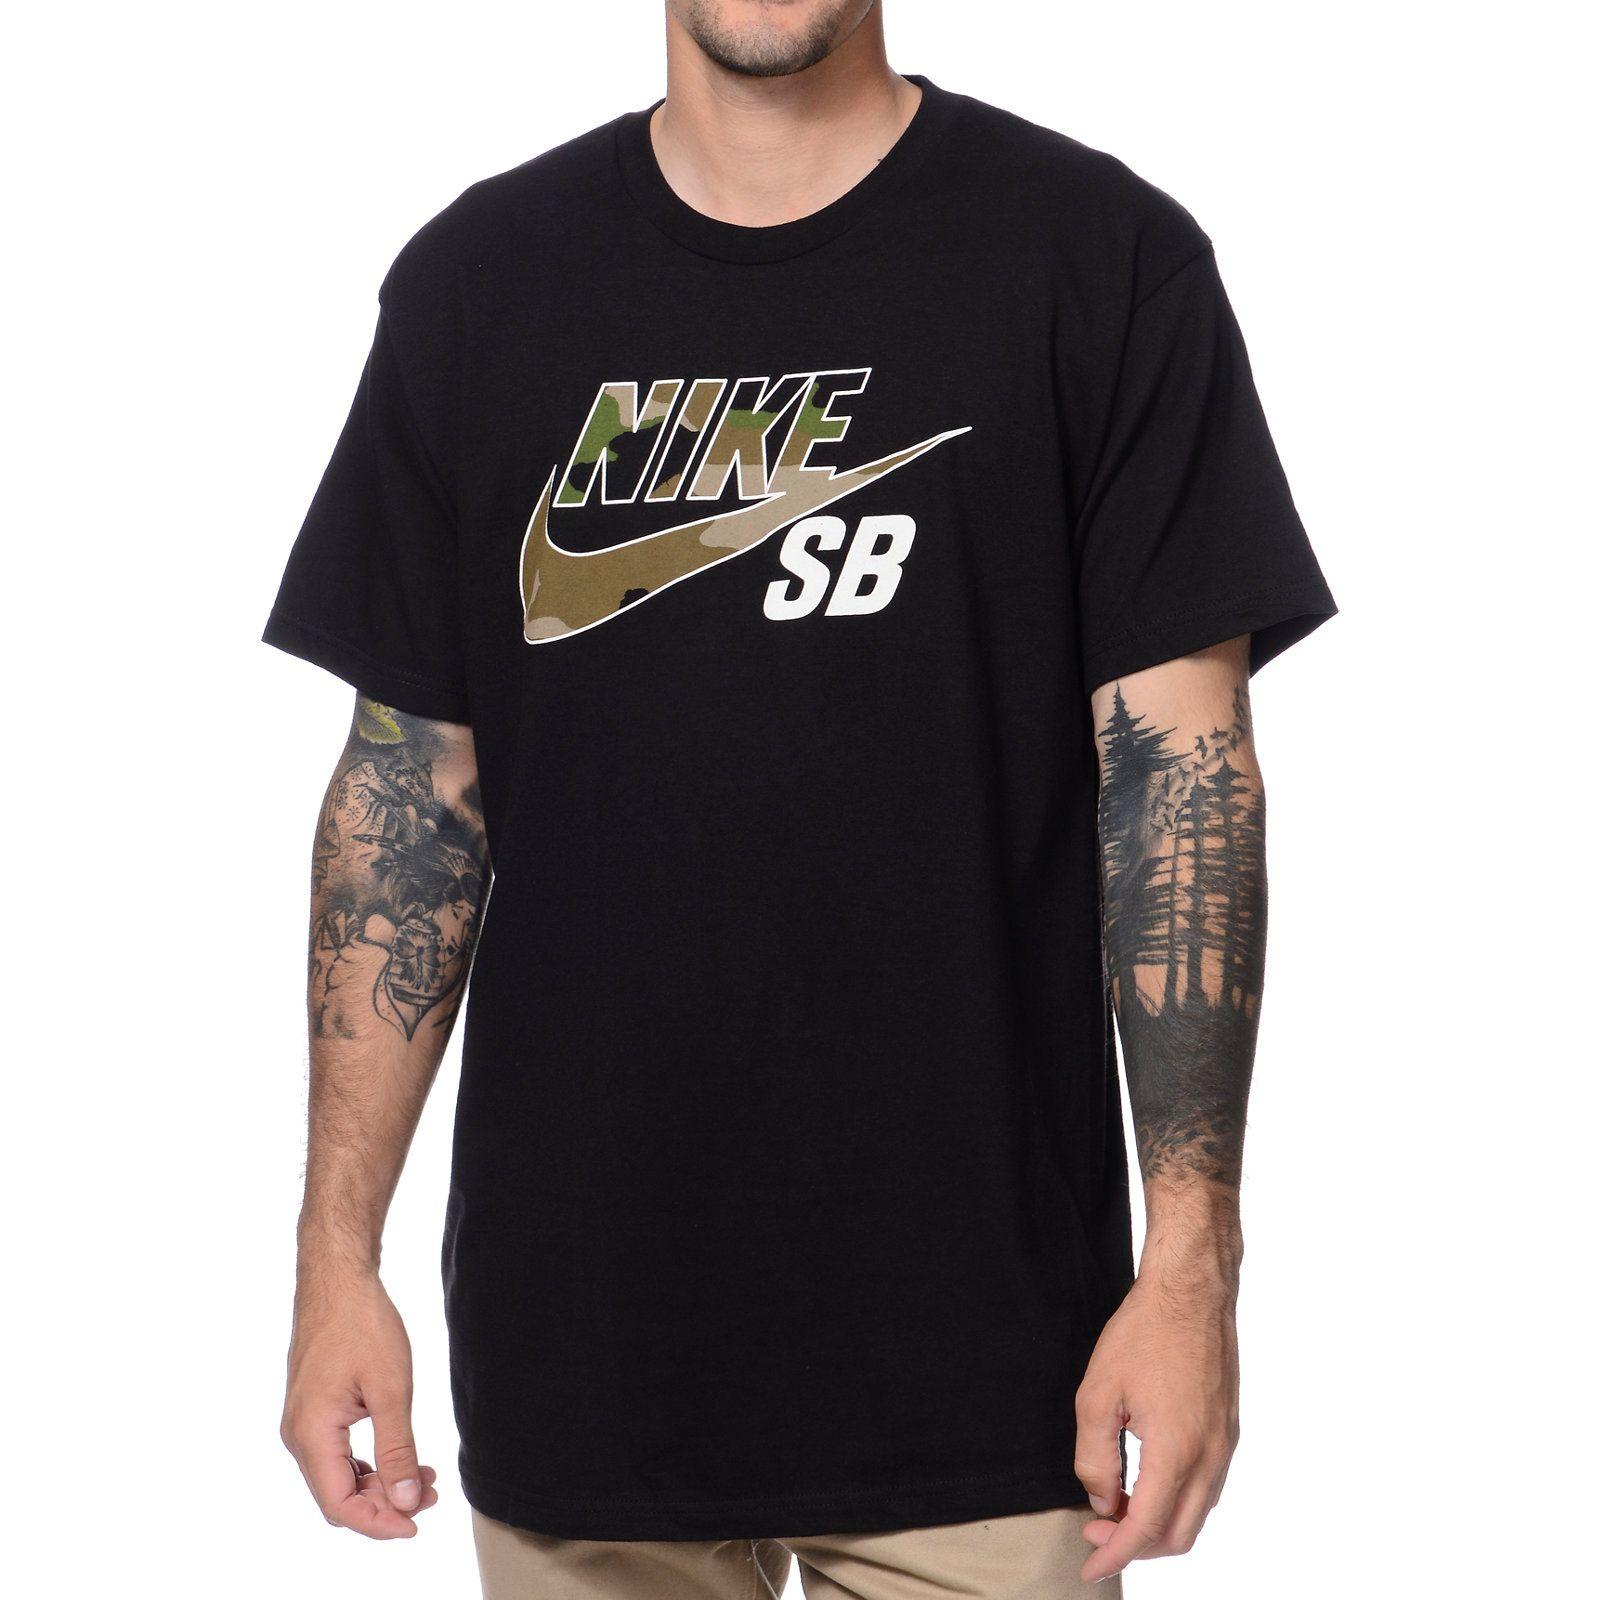 Nike SB Camo Logo - Nike SB QT Icon Camo Black T-Shirt | Clothes | Nike SB, Camo, Tee shirts